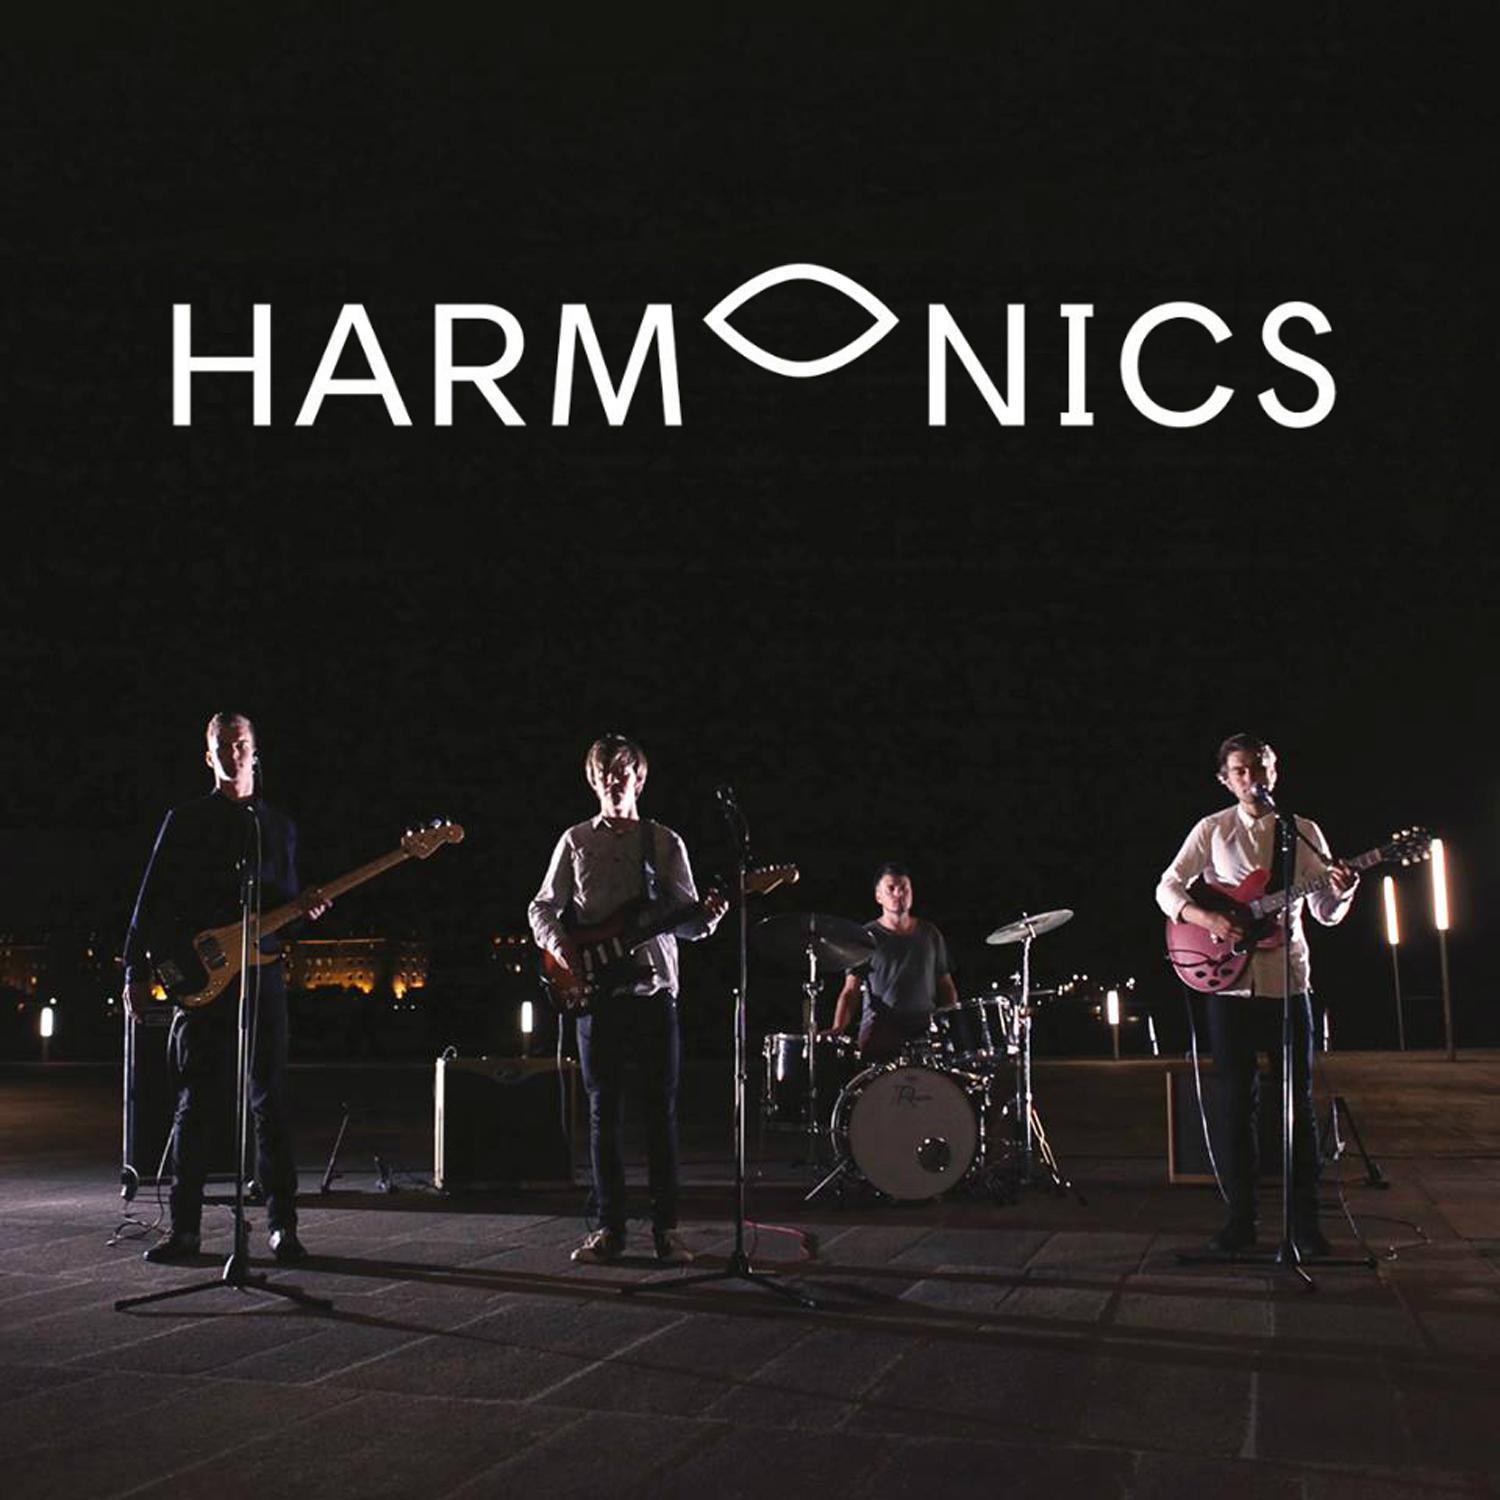 Harmonics - Reflections of a Man